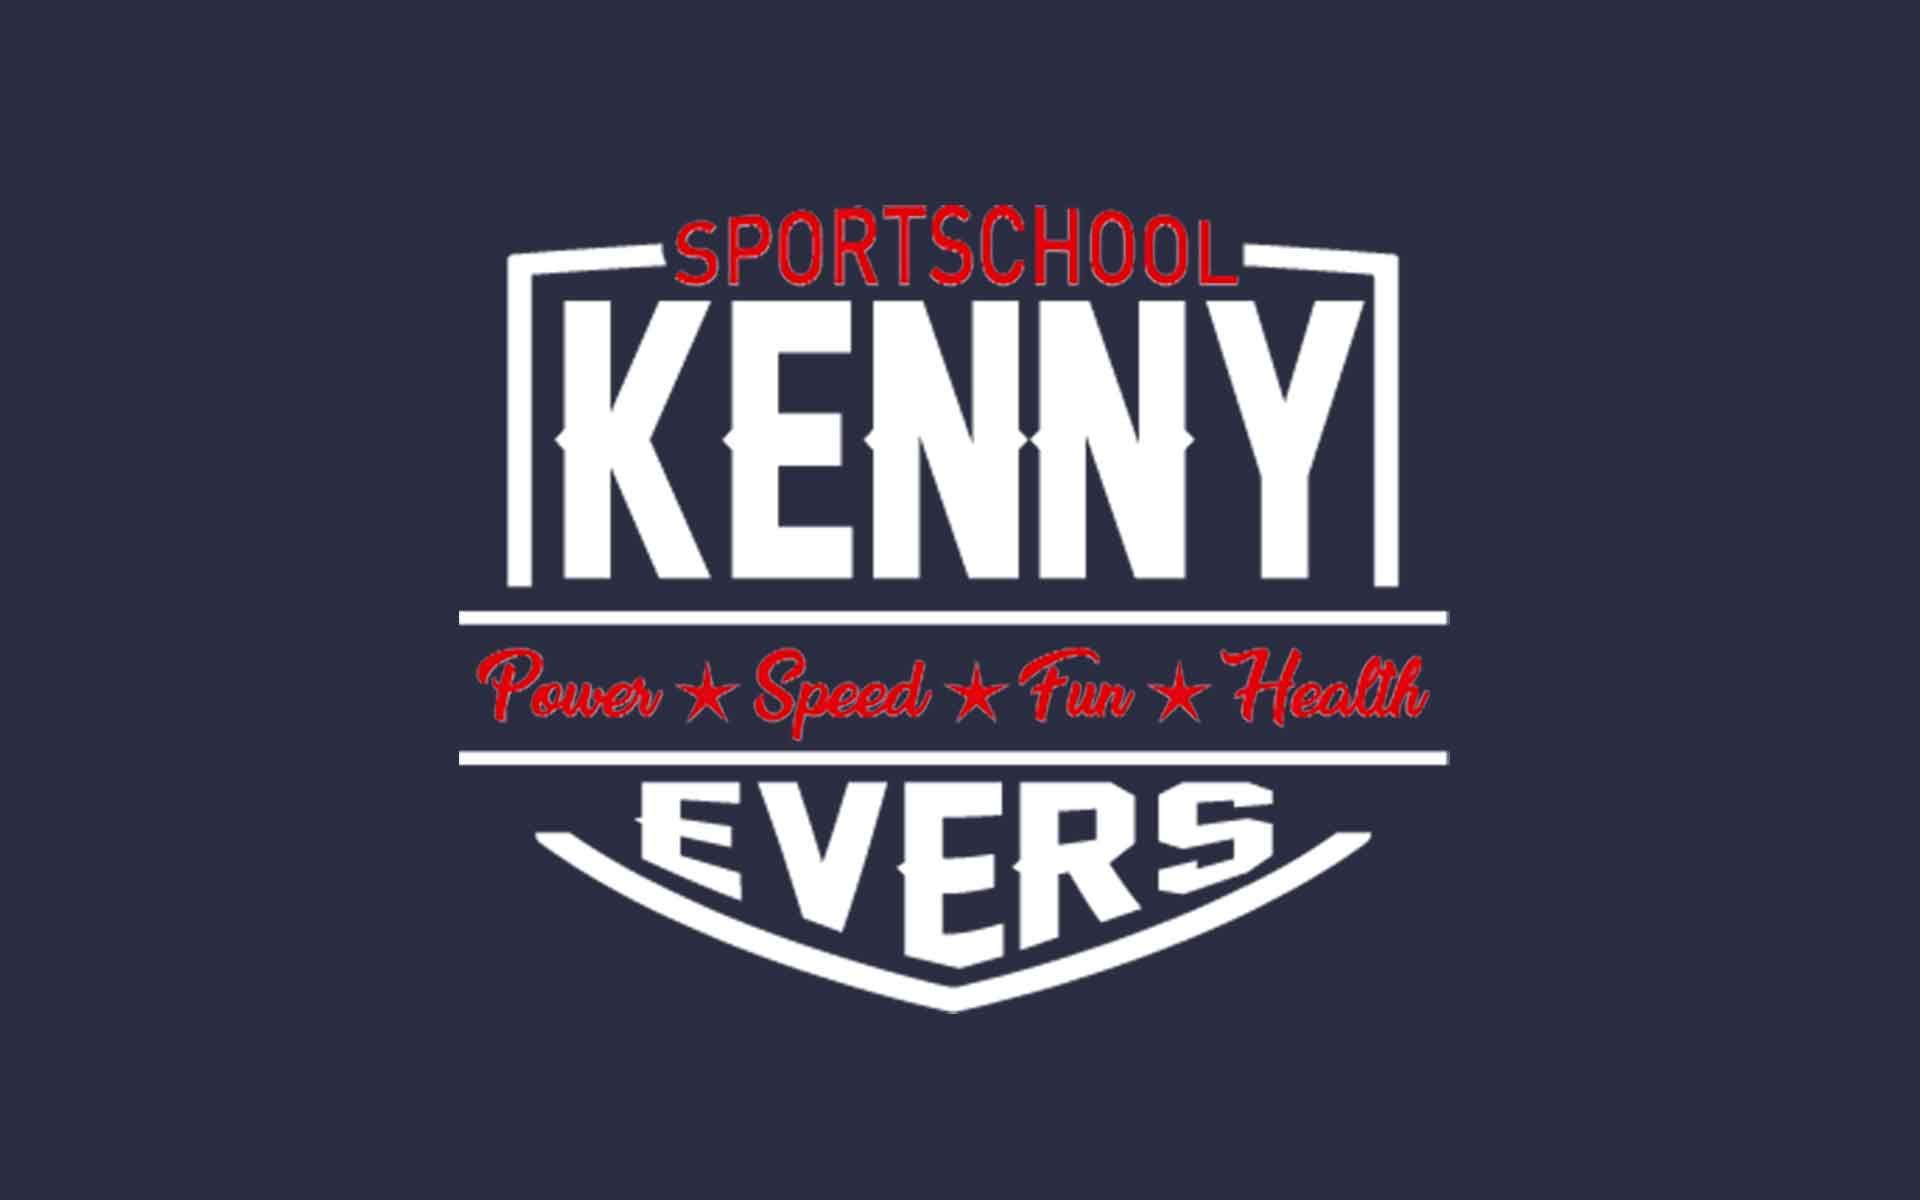 Sportschool-Kenny Evers